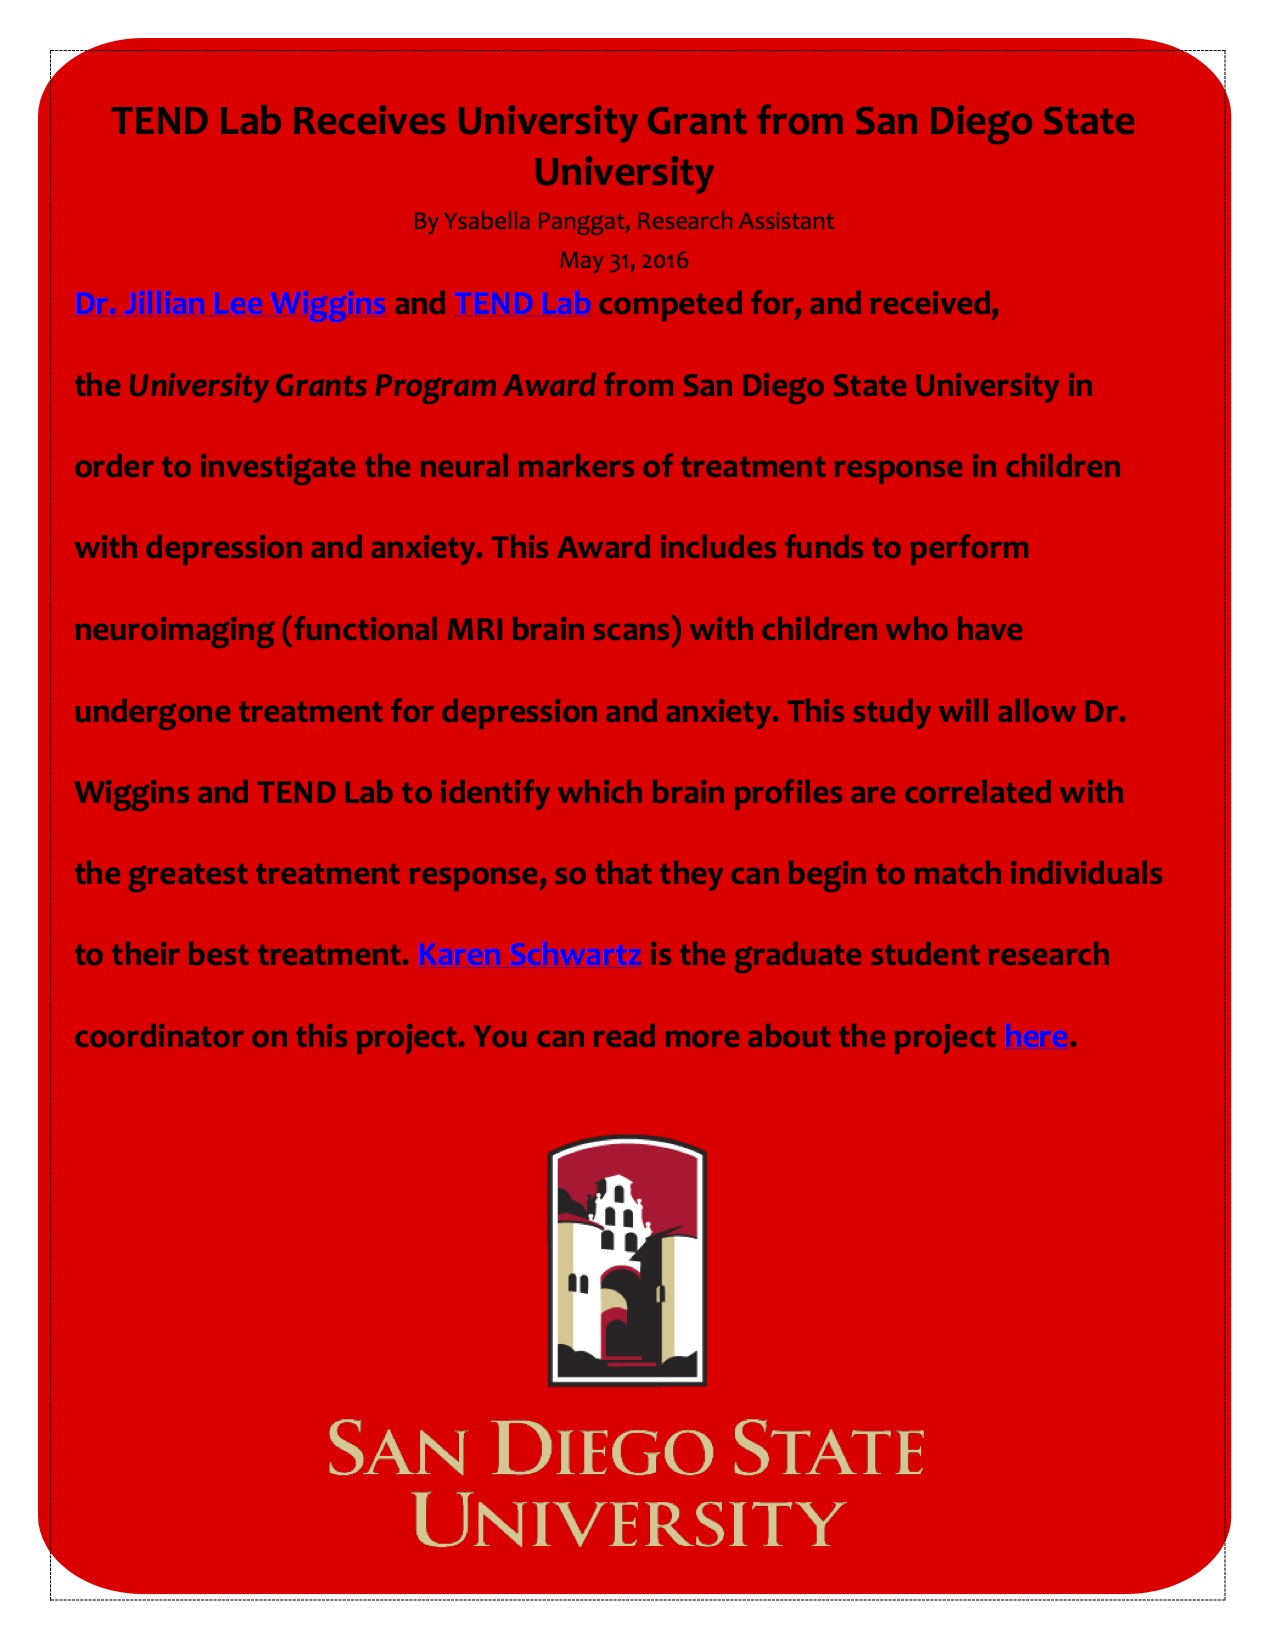 Article on TEND Lab university grant titled "TEND Lab Receives University Grant from San Diego State University"